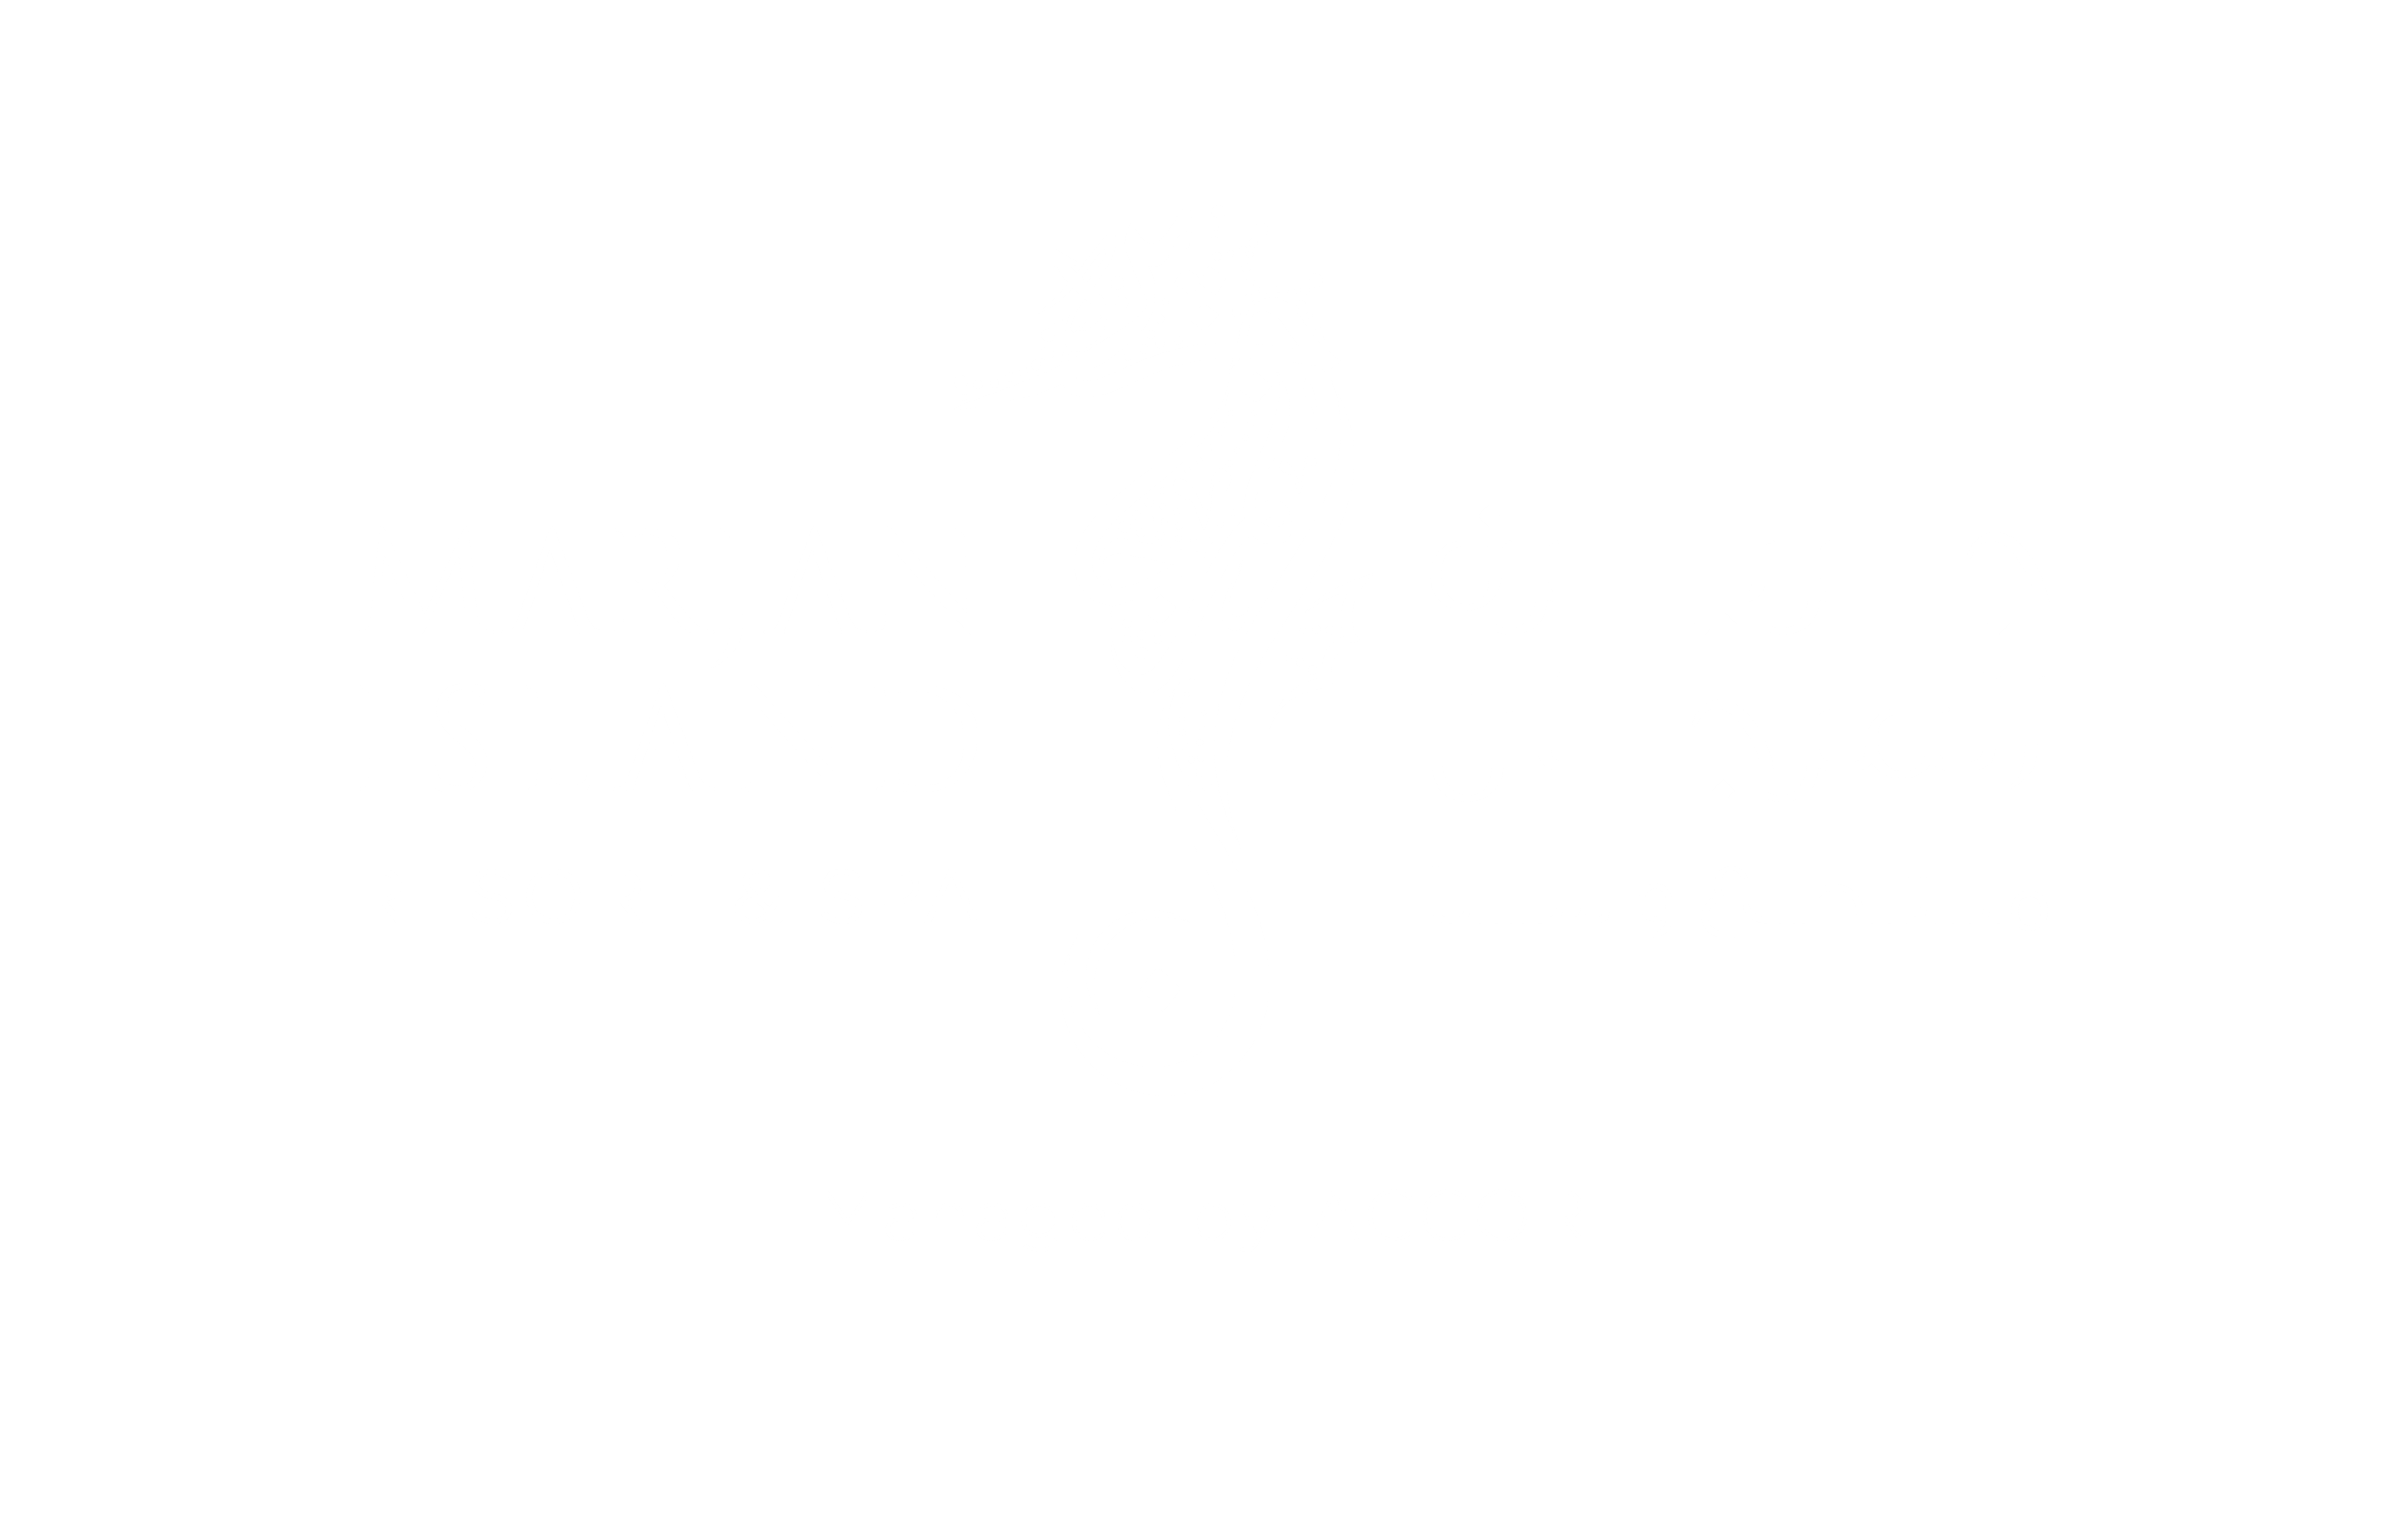 Marjan Island Resort & Spa